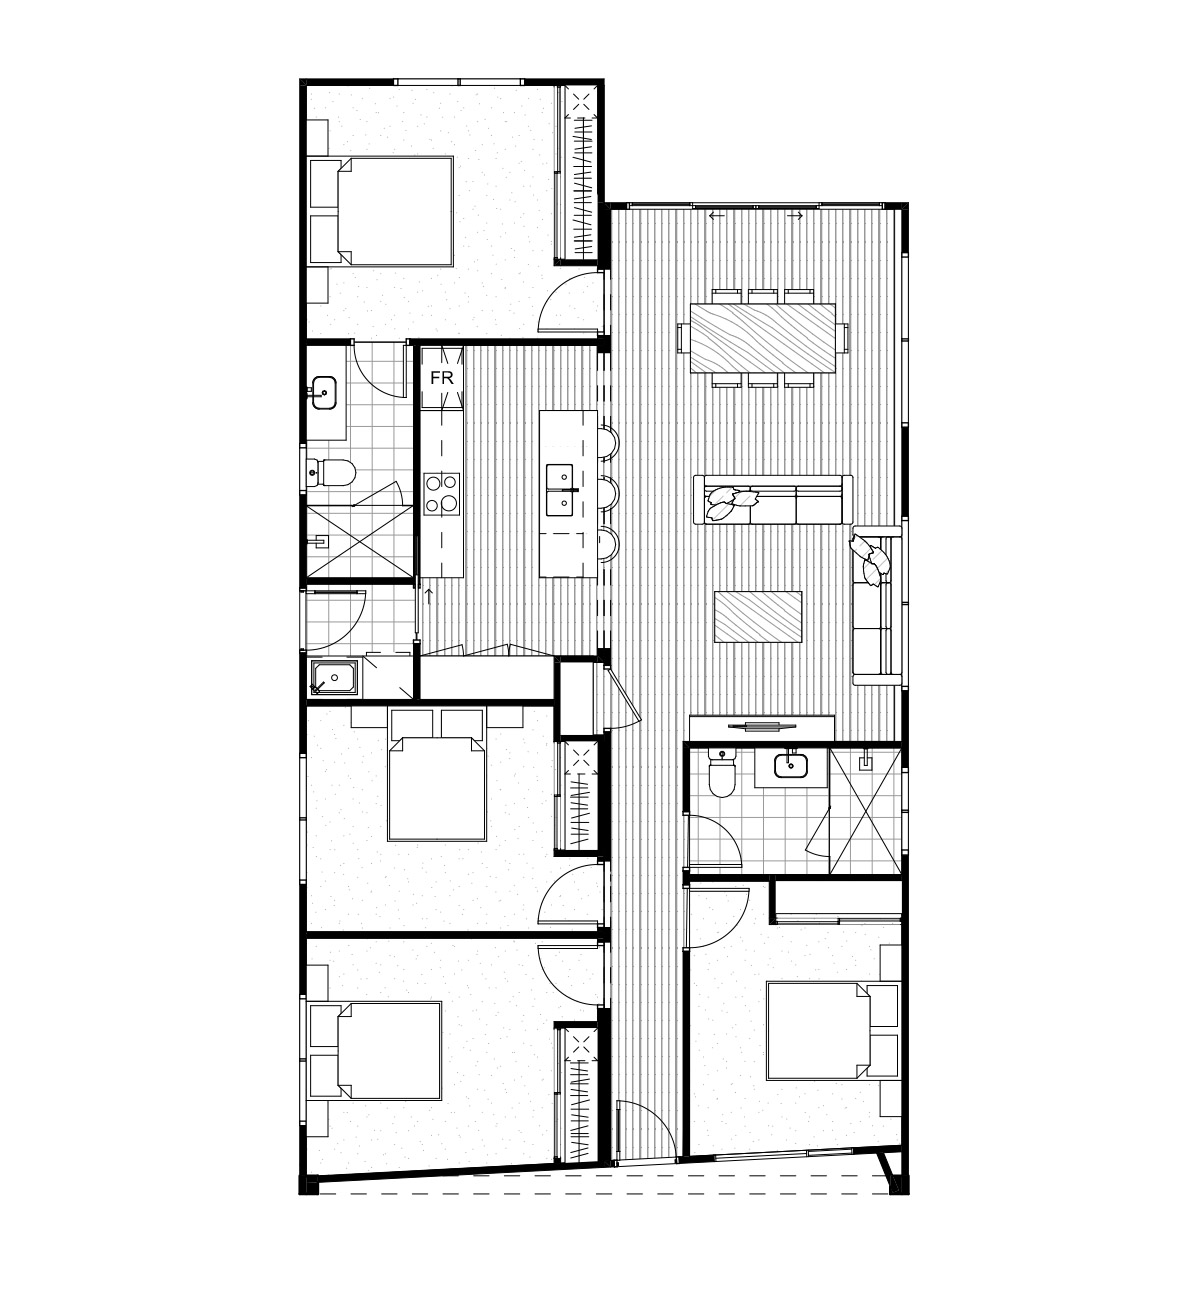 Spacious 4 bedroom floorplan designed for Bold Boundaries